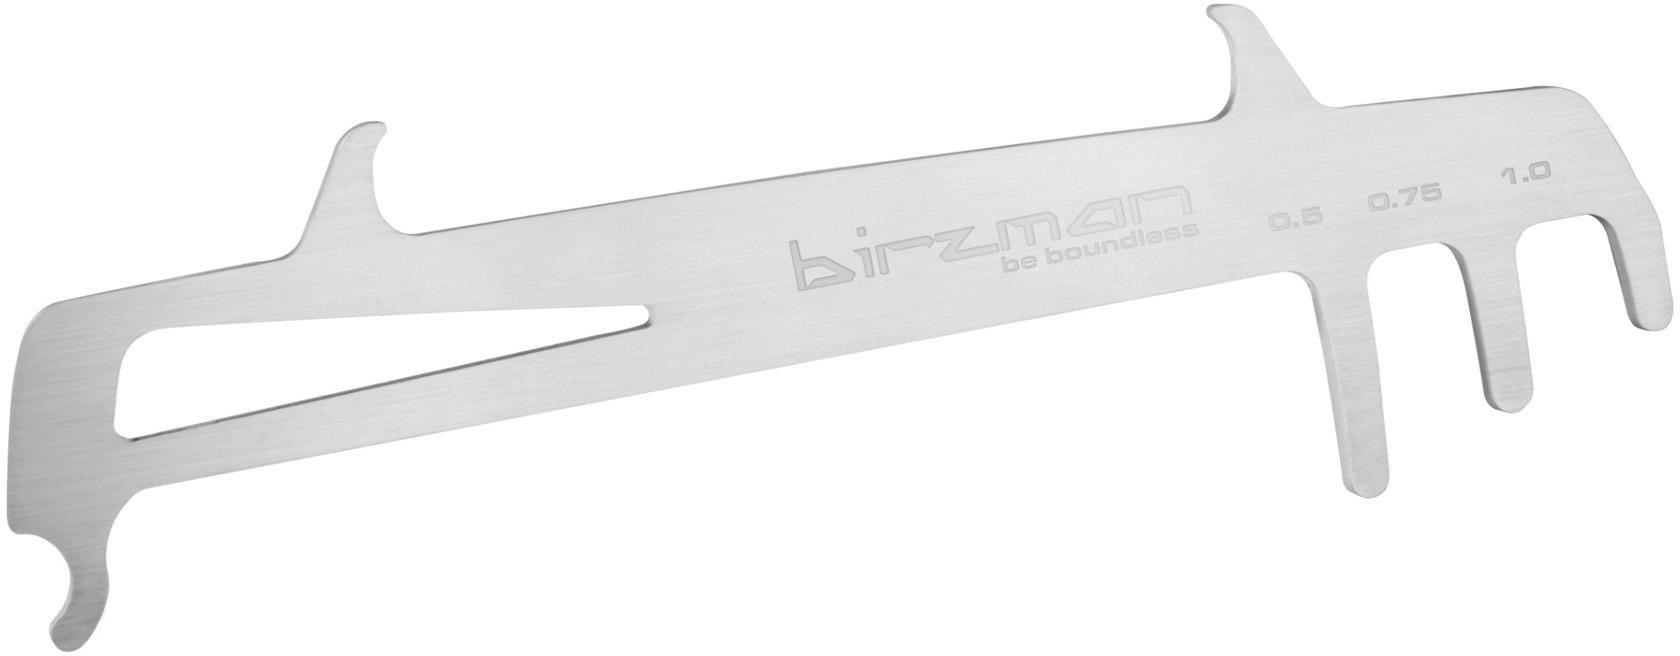 Birzman Chain Wear Indicator  Silver